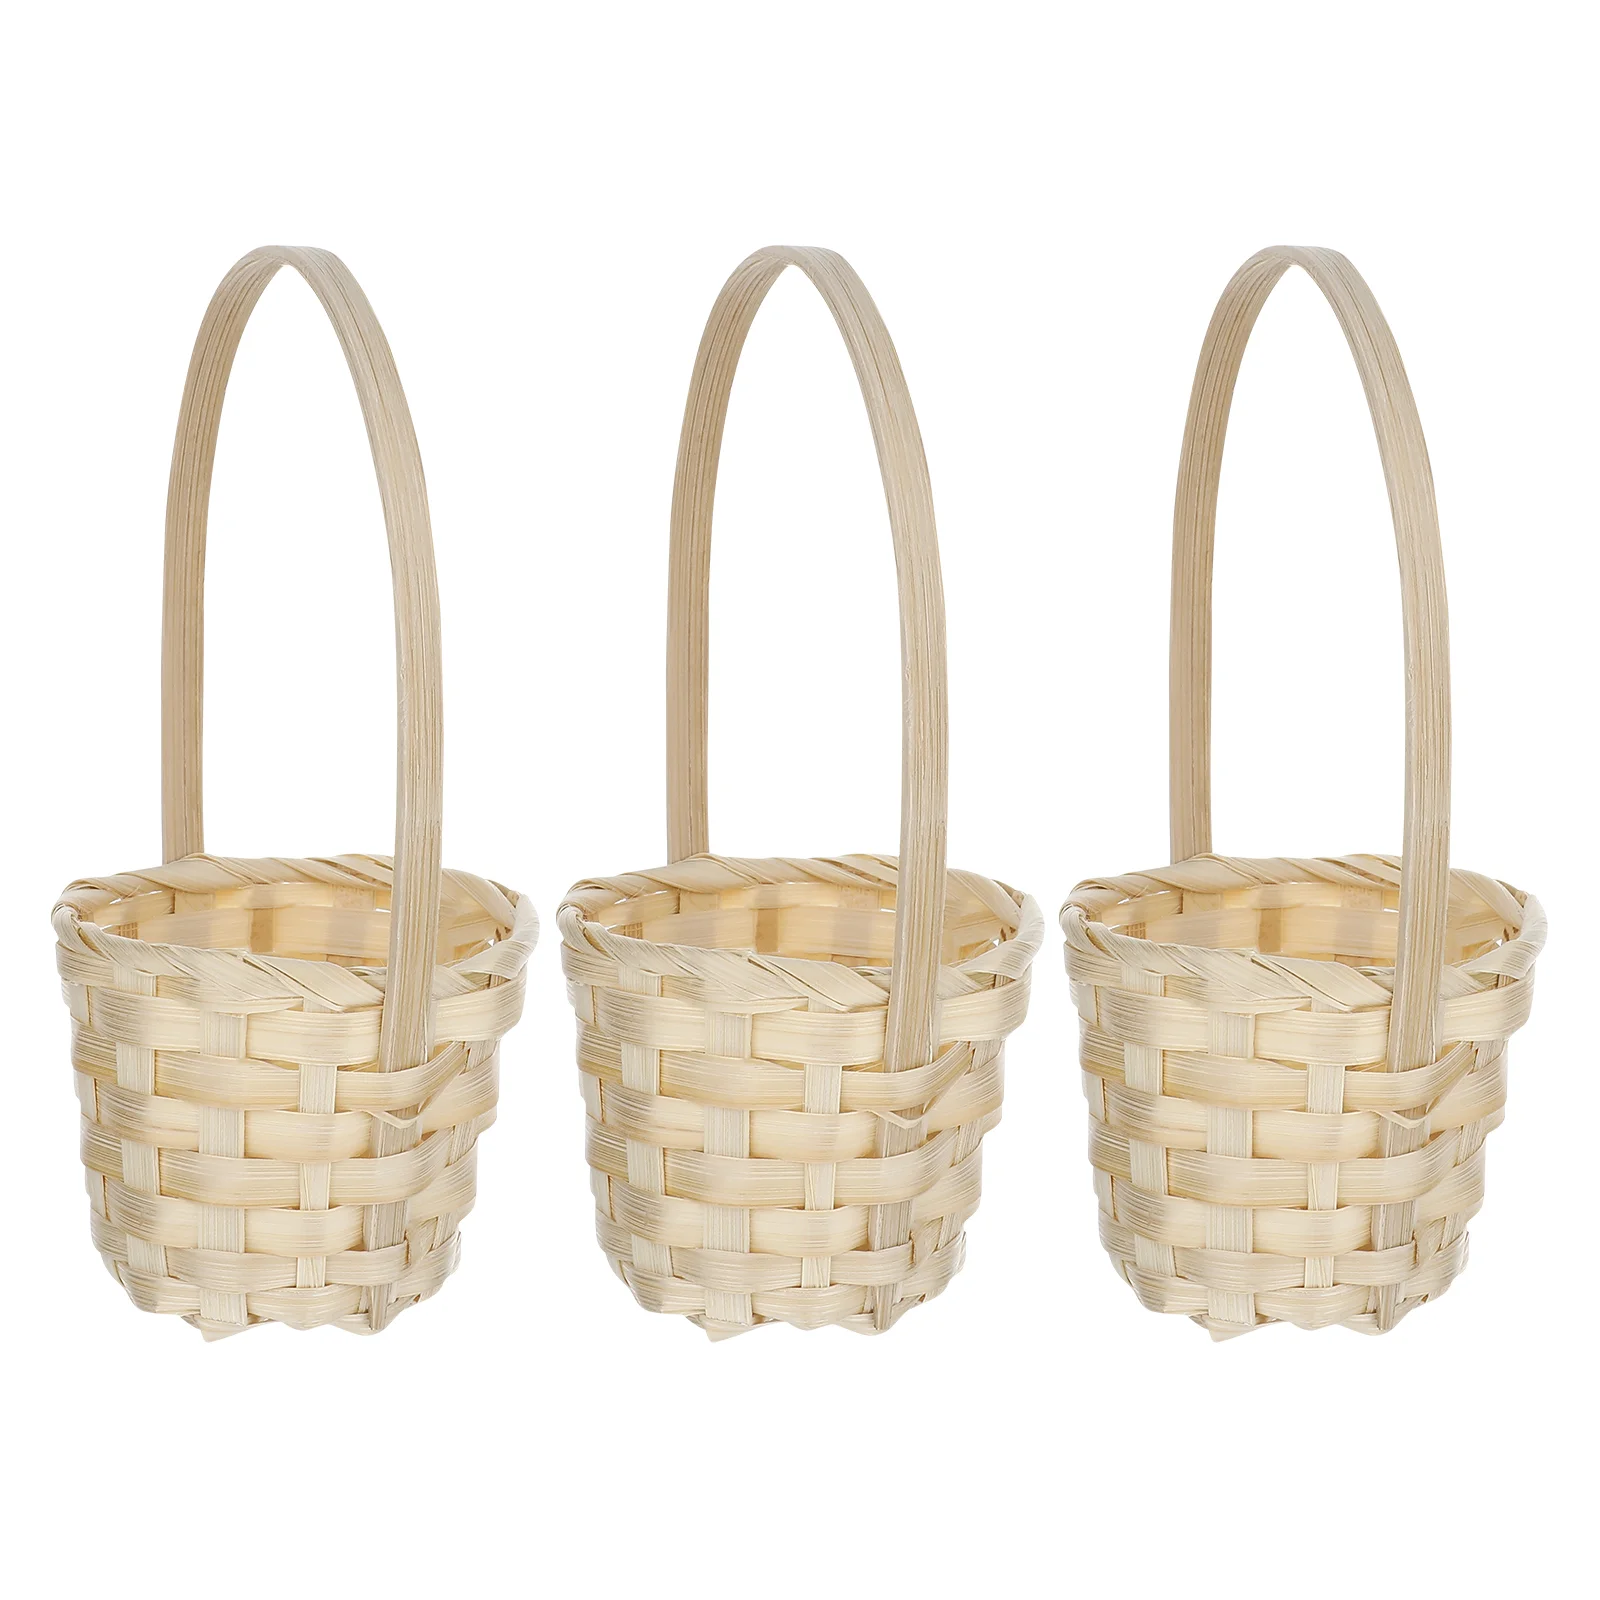 5 Pcs Weaving Basket Decorative Bamboo Flower Wicker Storage Baskets Gifts Empty Small